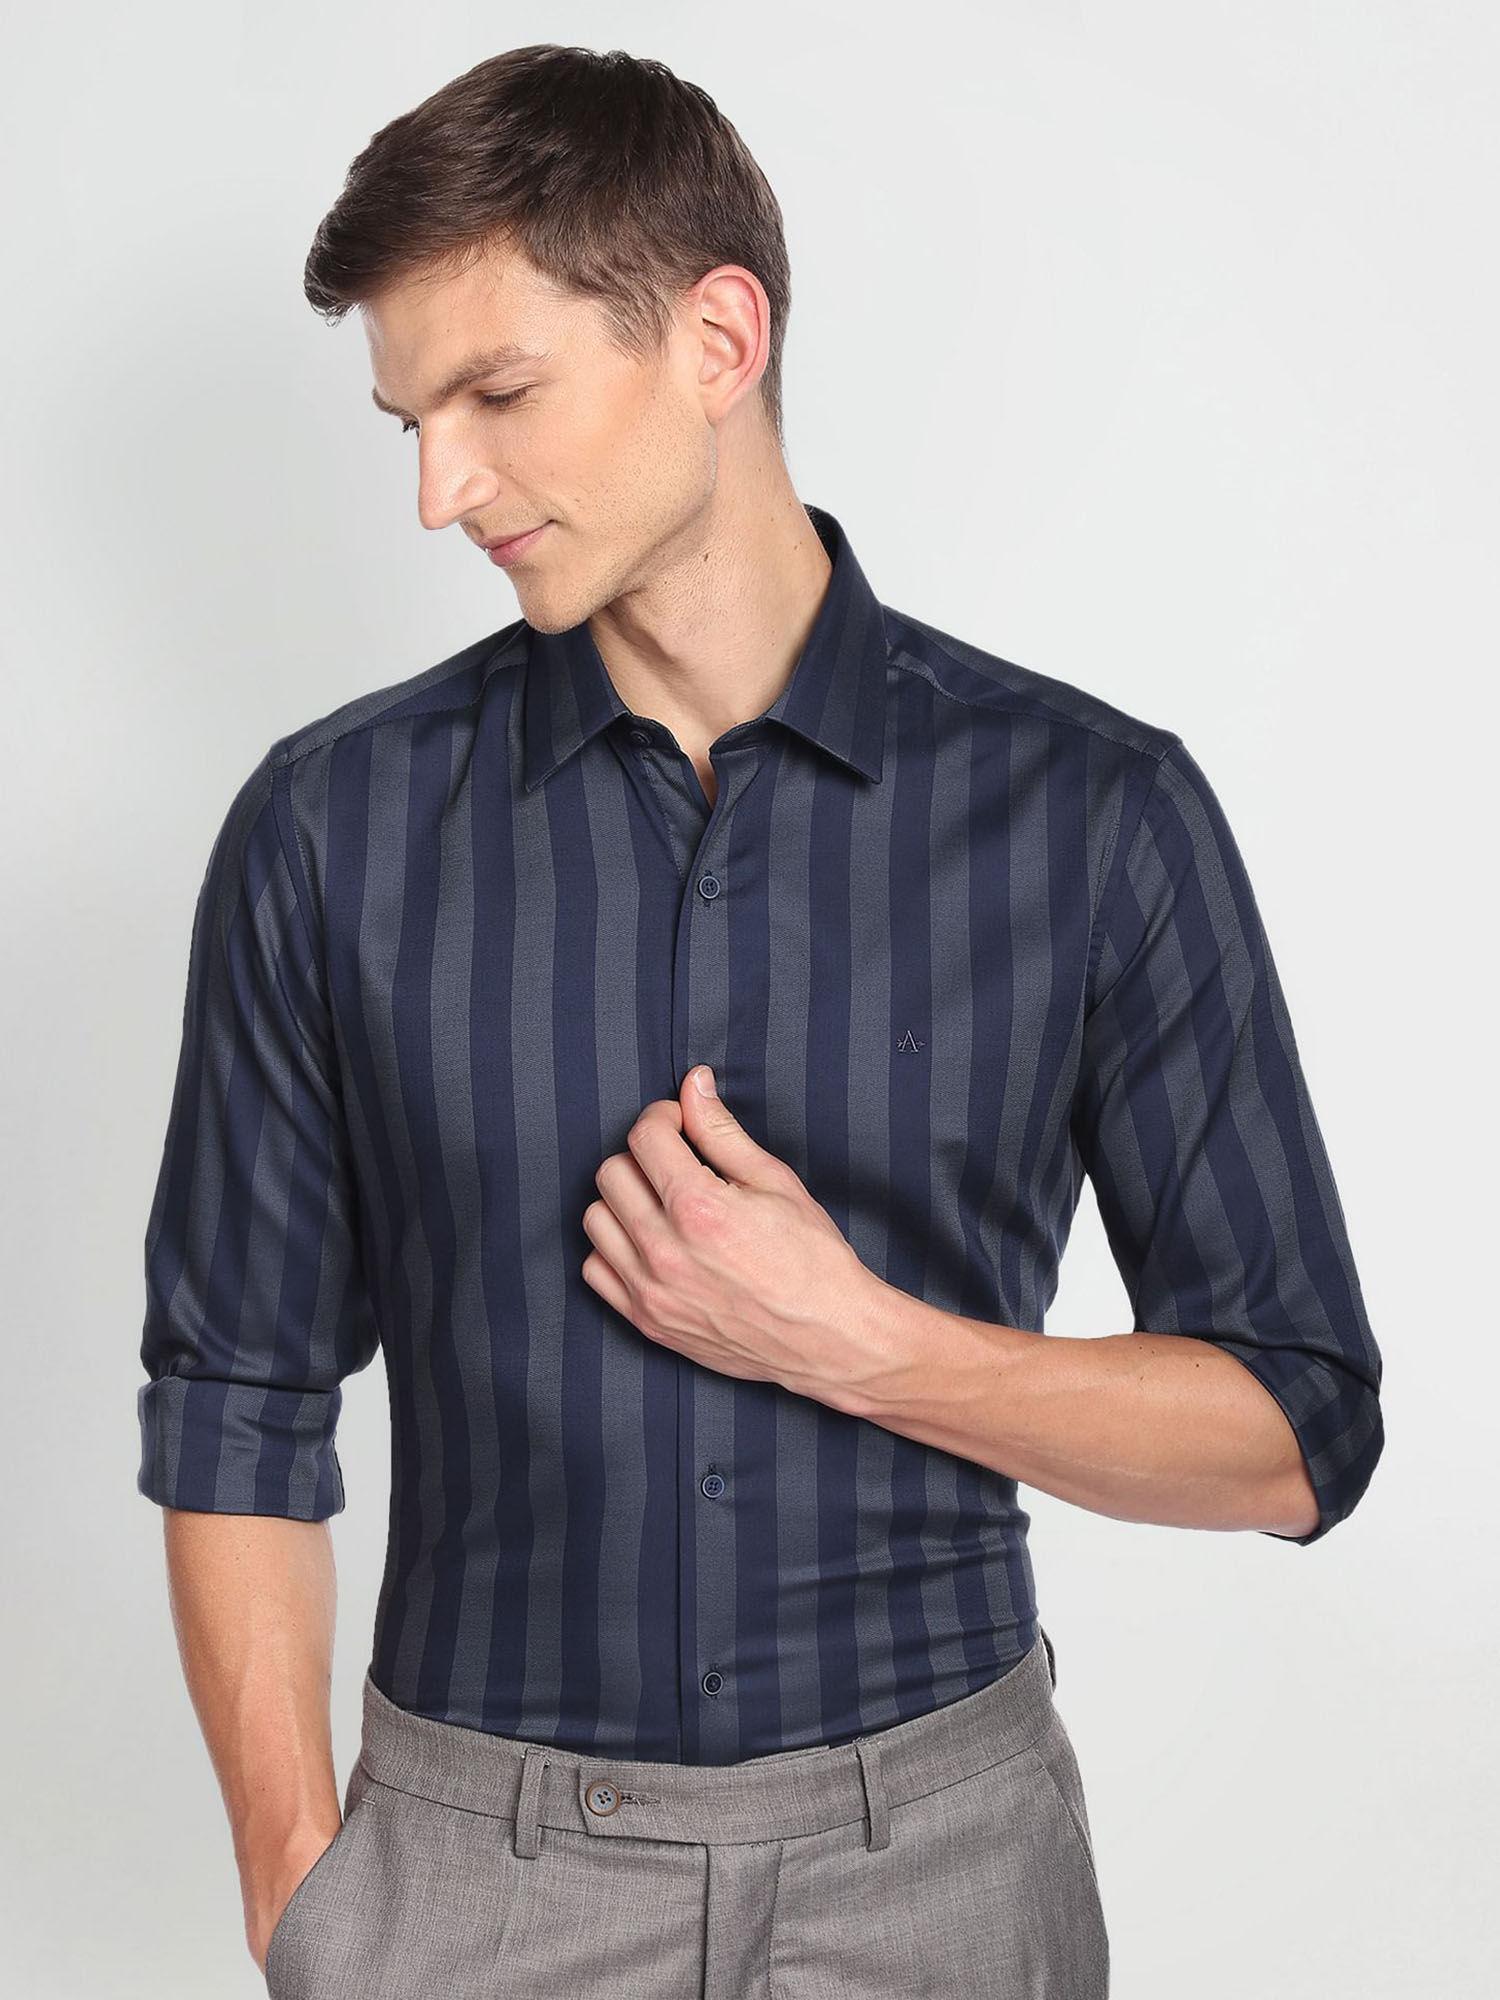 Arrow New York Vertical Stripe Cotton Formal Blue Shirt